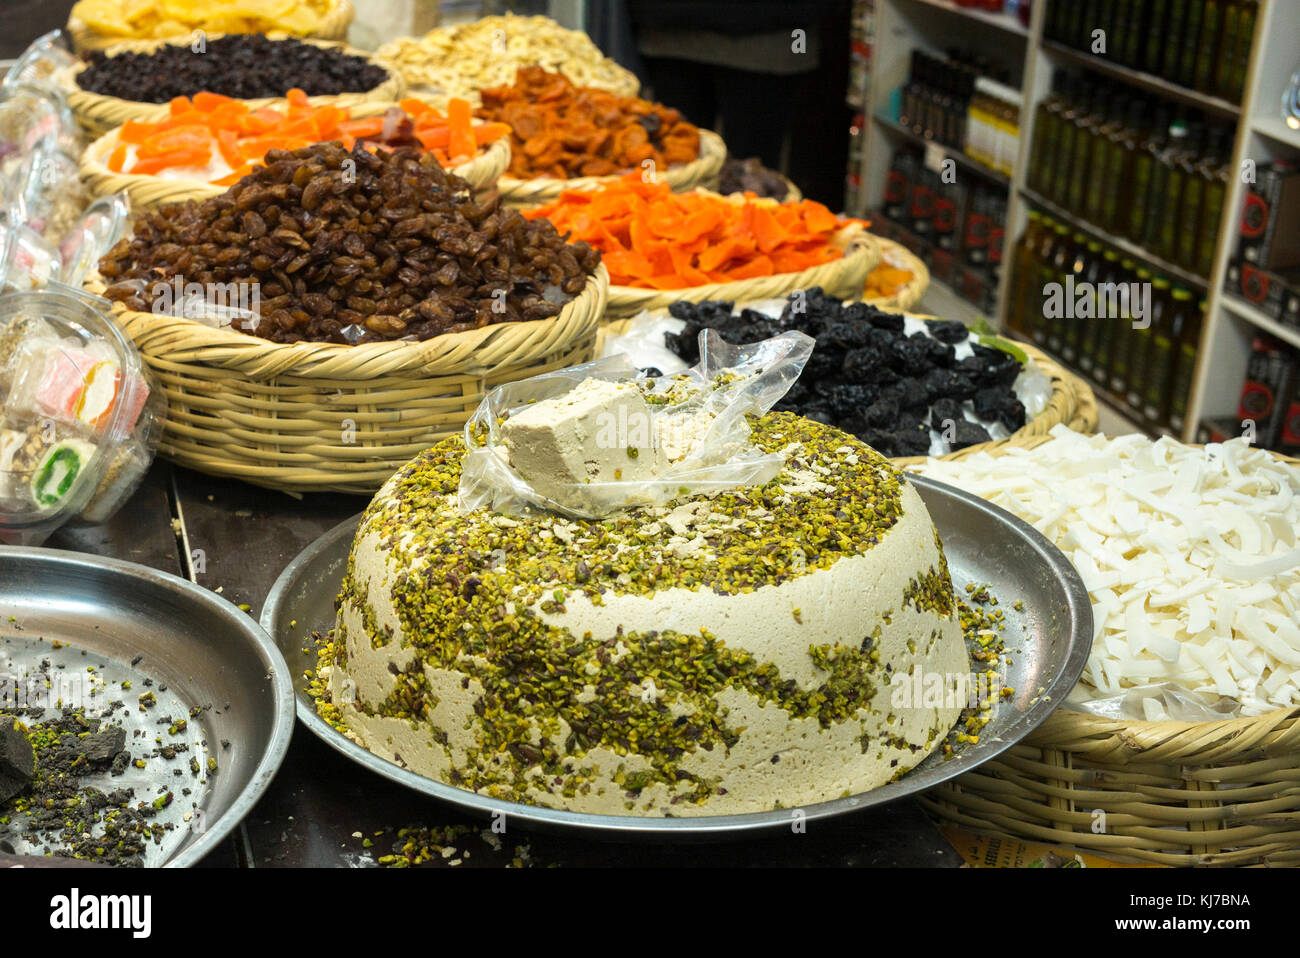 Traditional food for sale in market, Arabic Market, Old City, Jerusalem, Israel Stock Photo